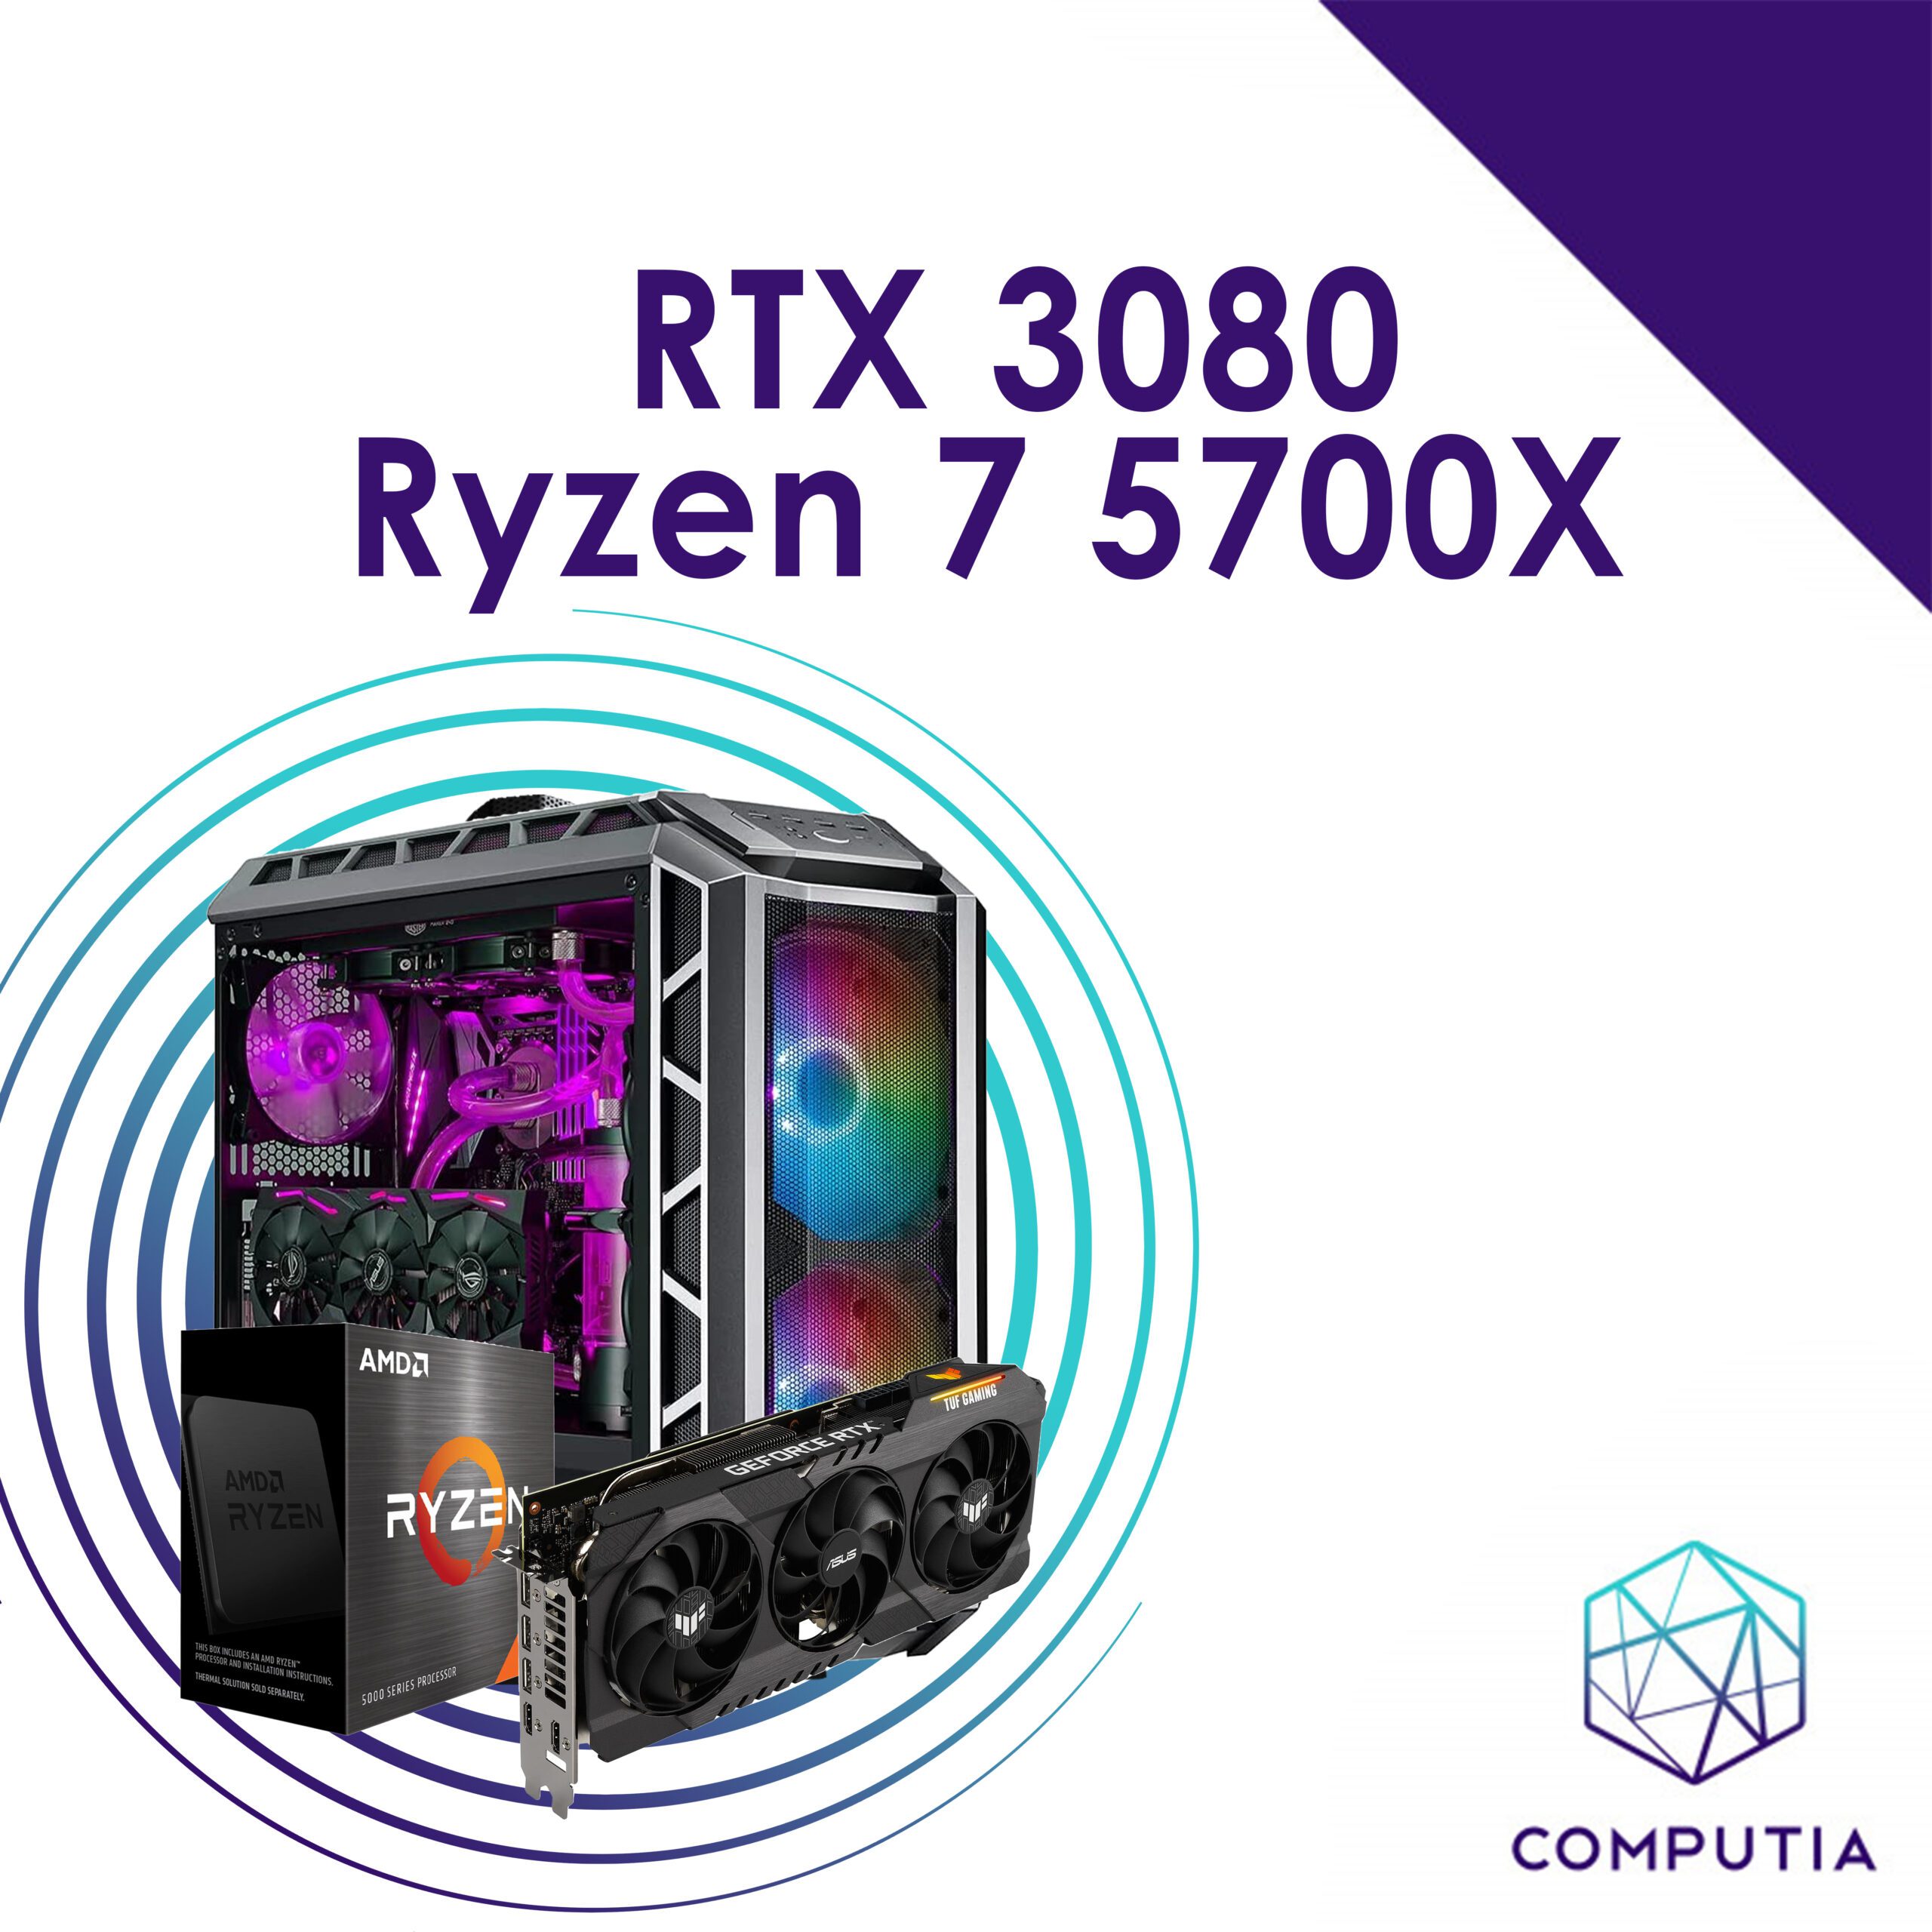 Computia RTX 3080 / Ryzen 7 5700X PC Build with 240mm AIO - Computia